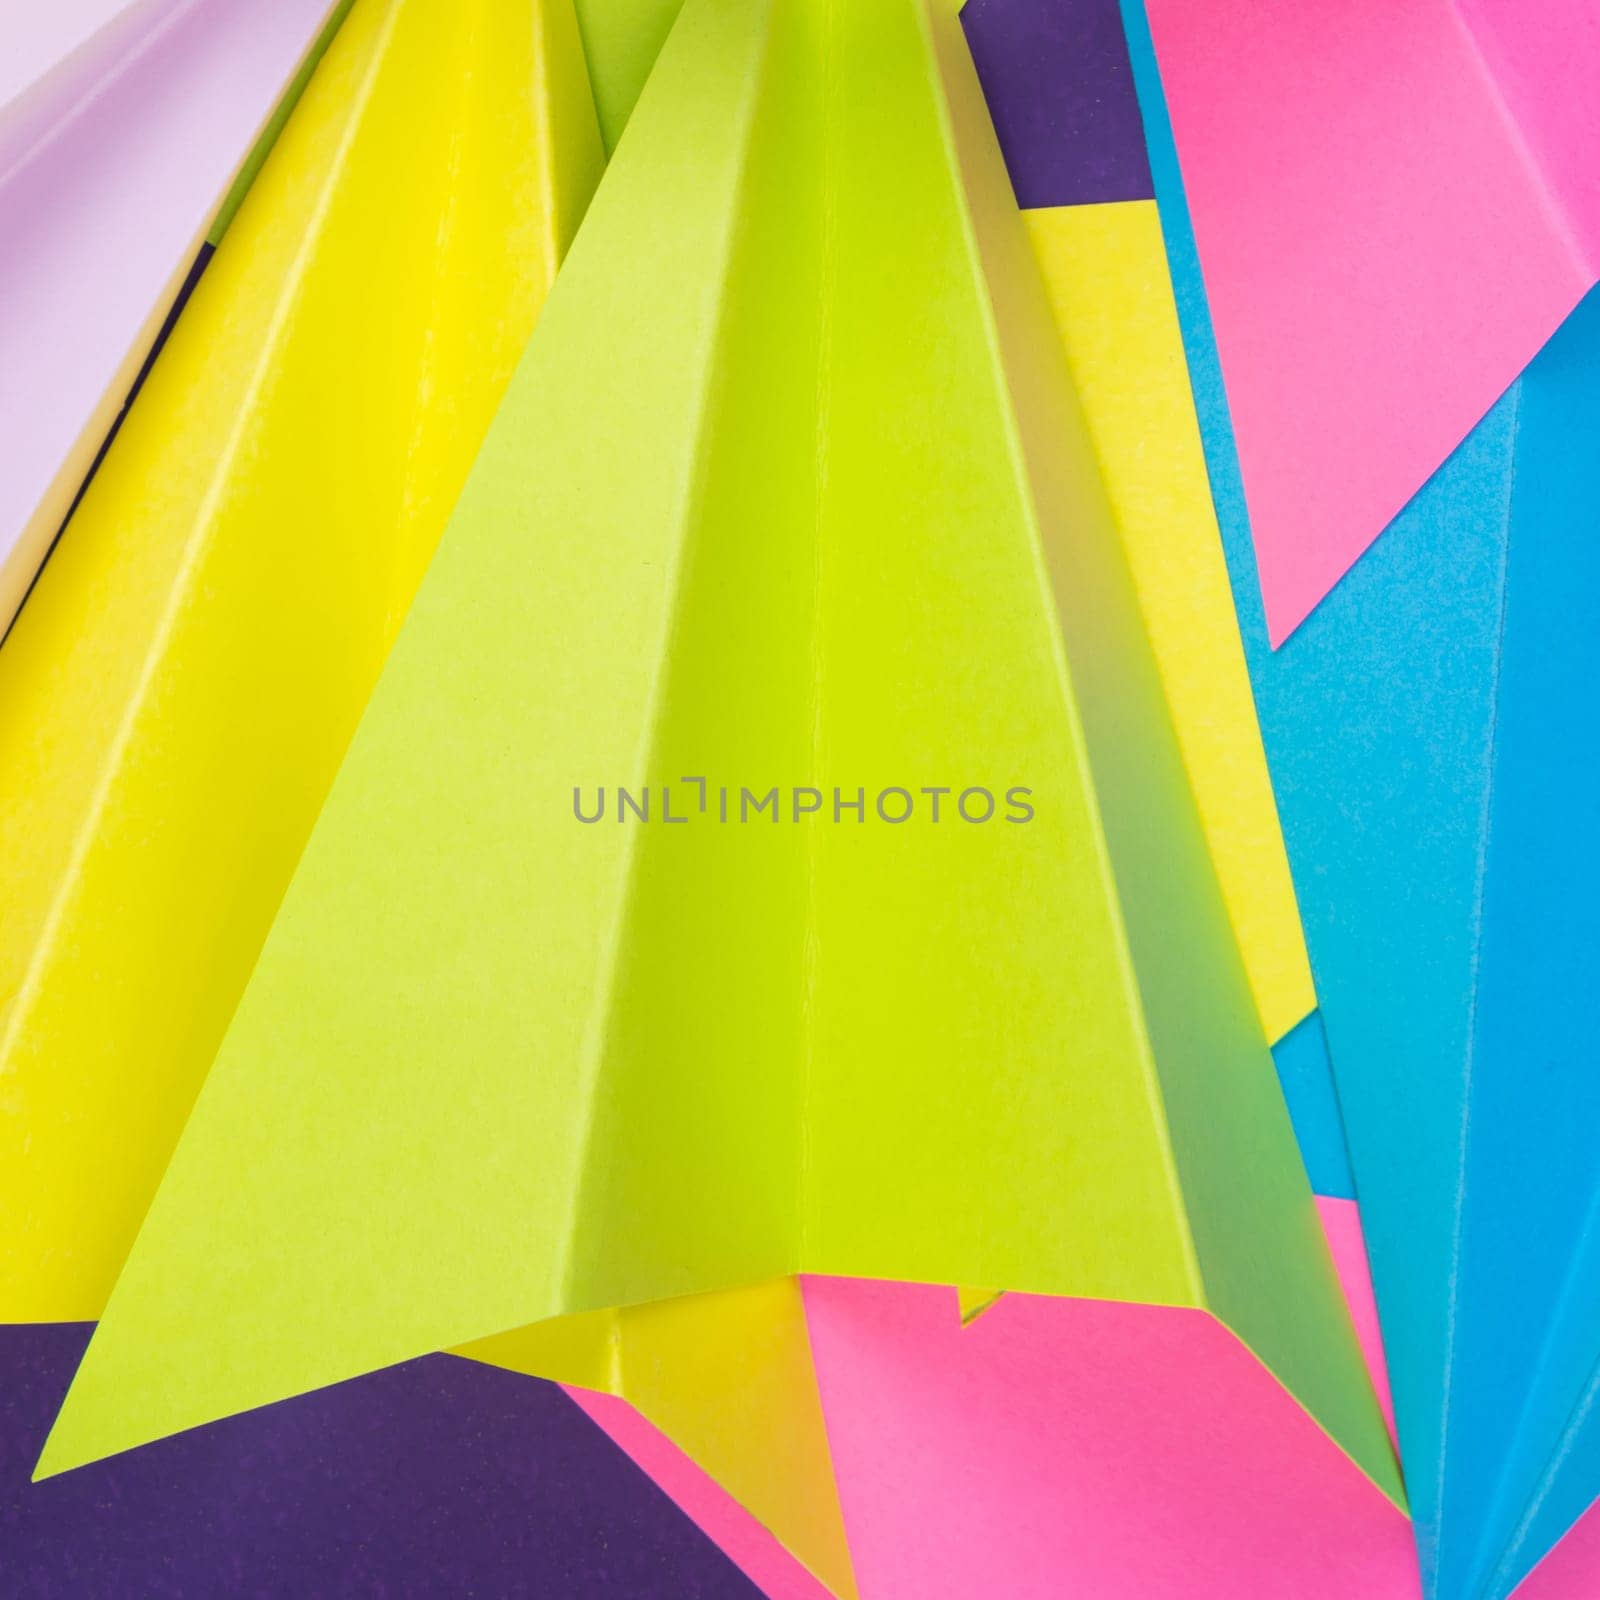 A closeup shot of colorful handmade paper planes